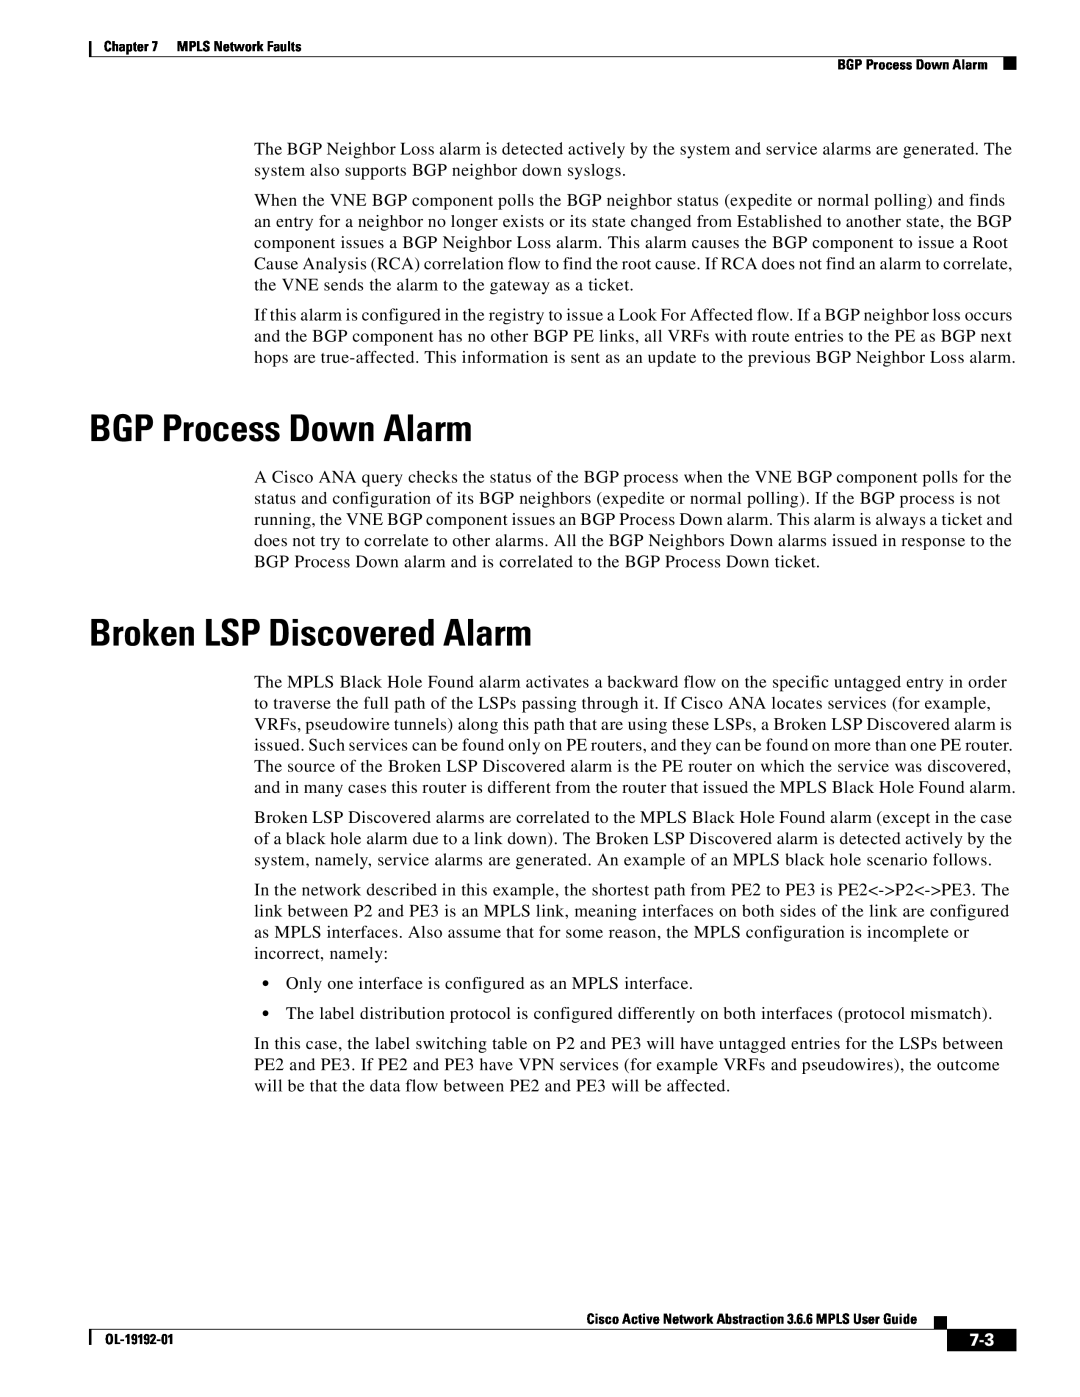 Cisco Systems 3.6.6 manual BGP Process Down Alarm, Broken LSP Discovered Alarm 